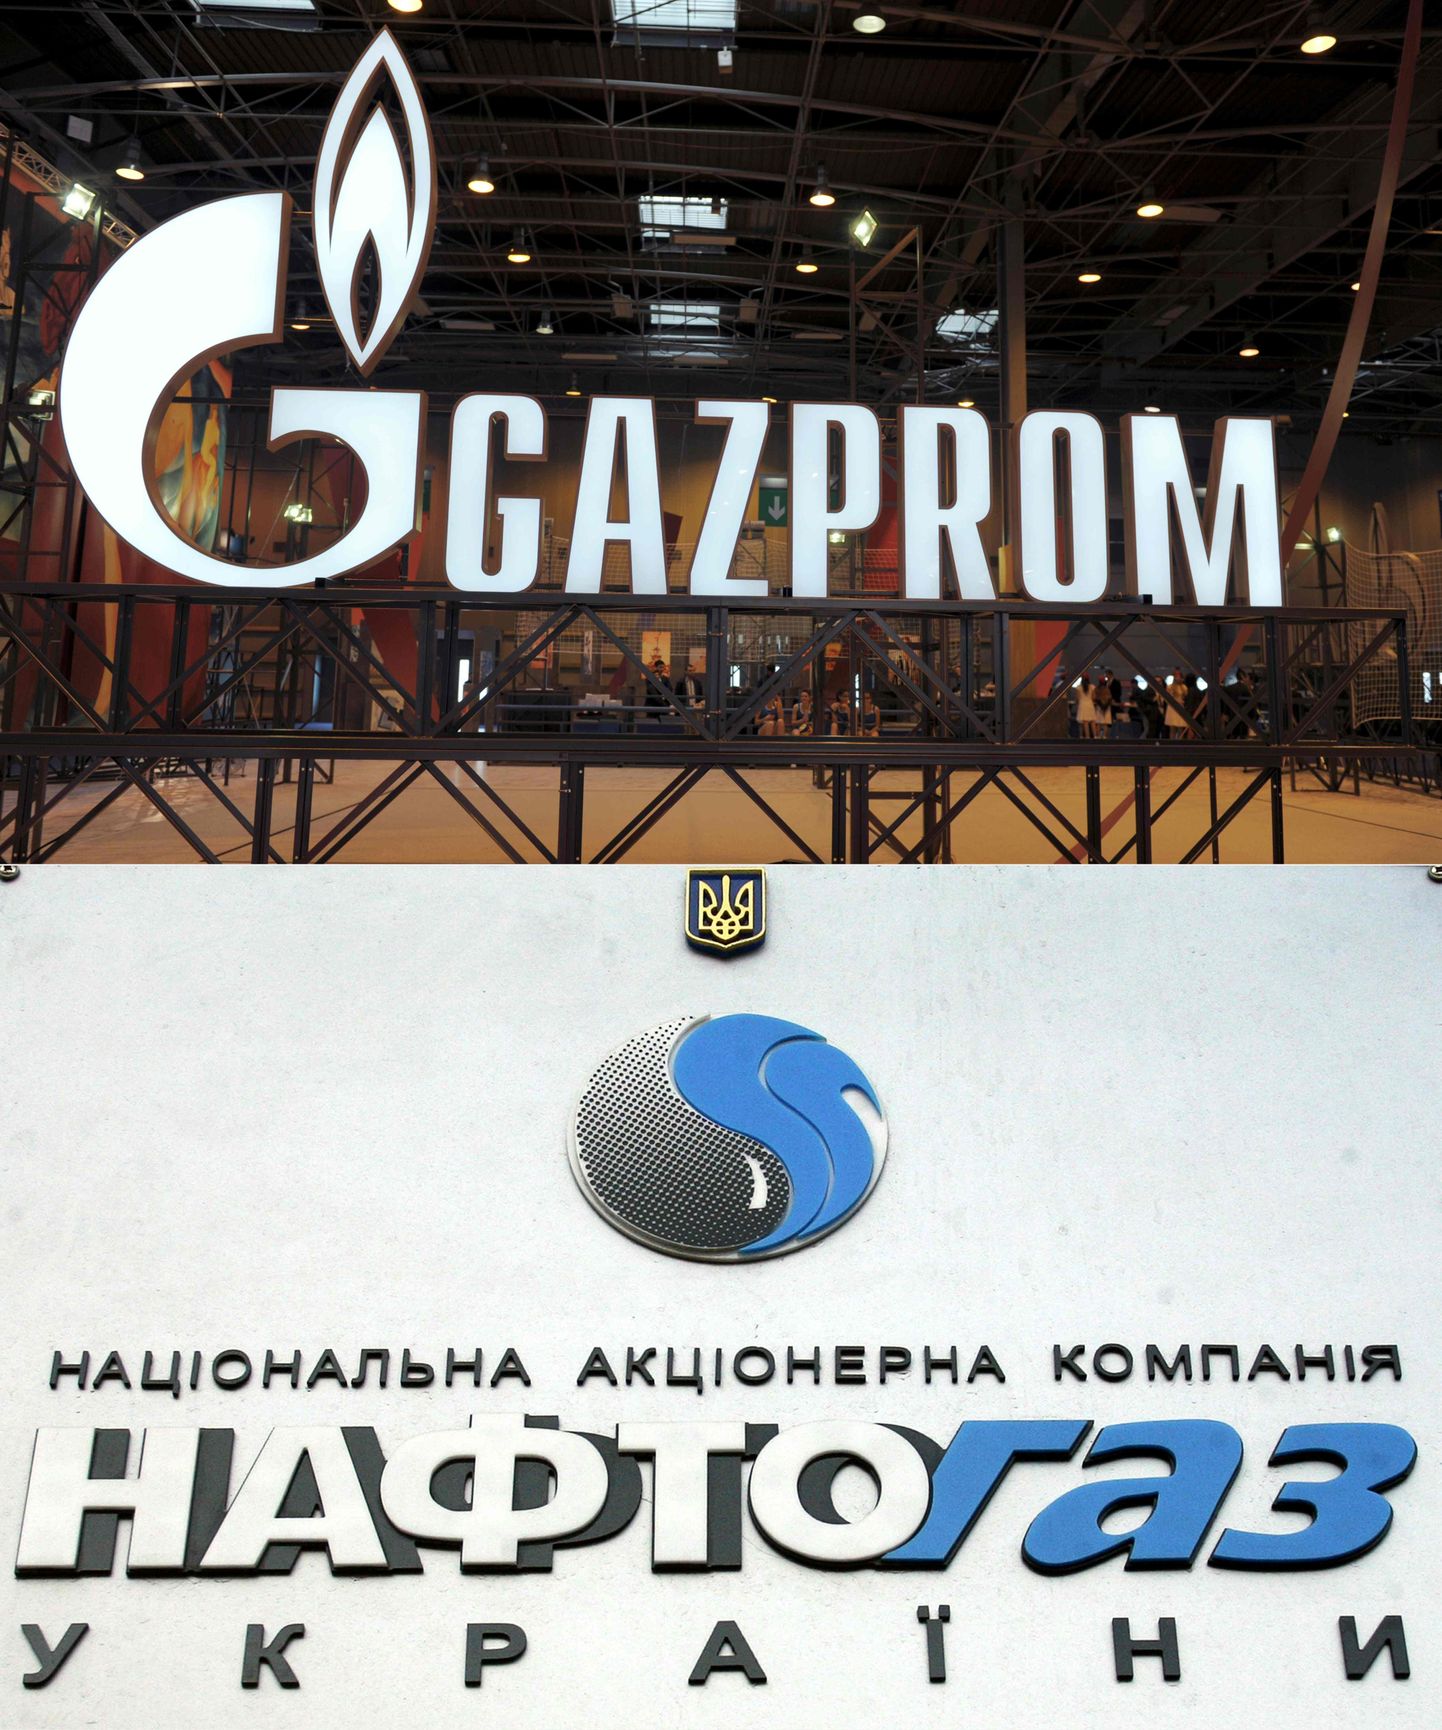 "Gazprom".